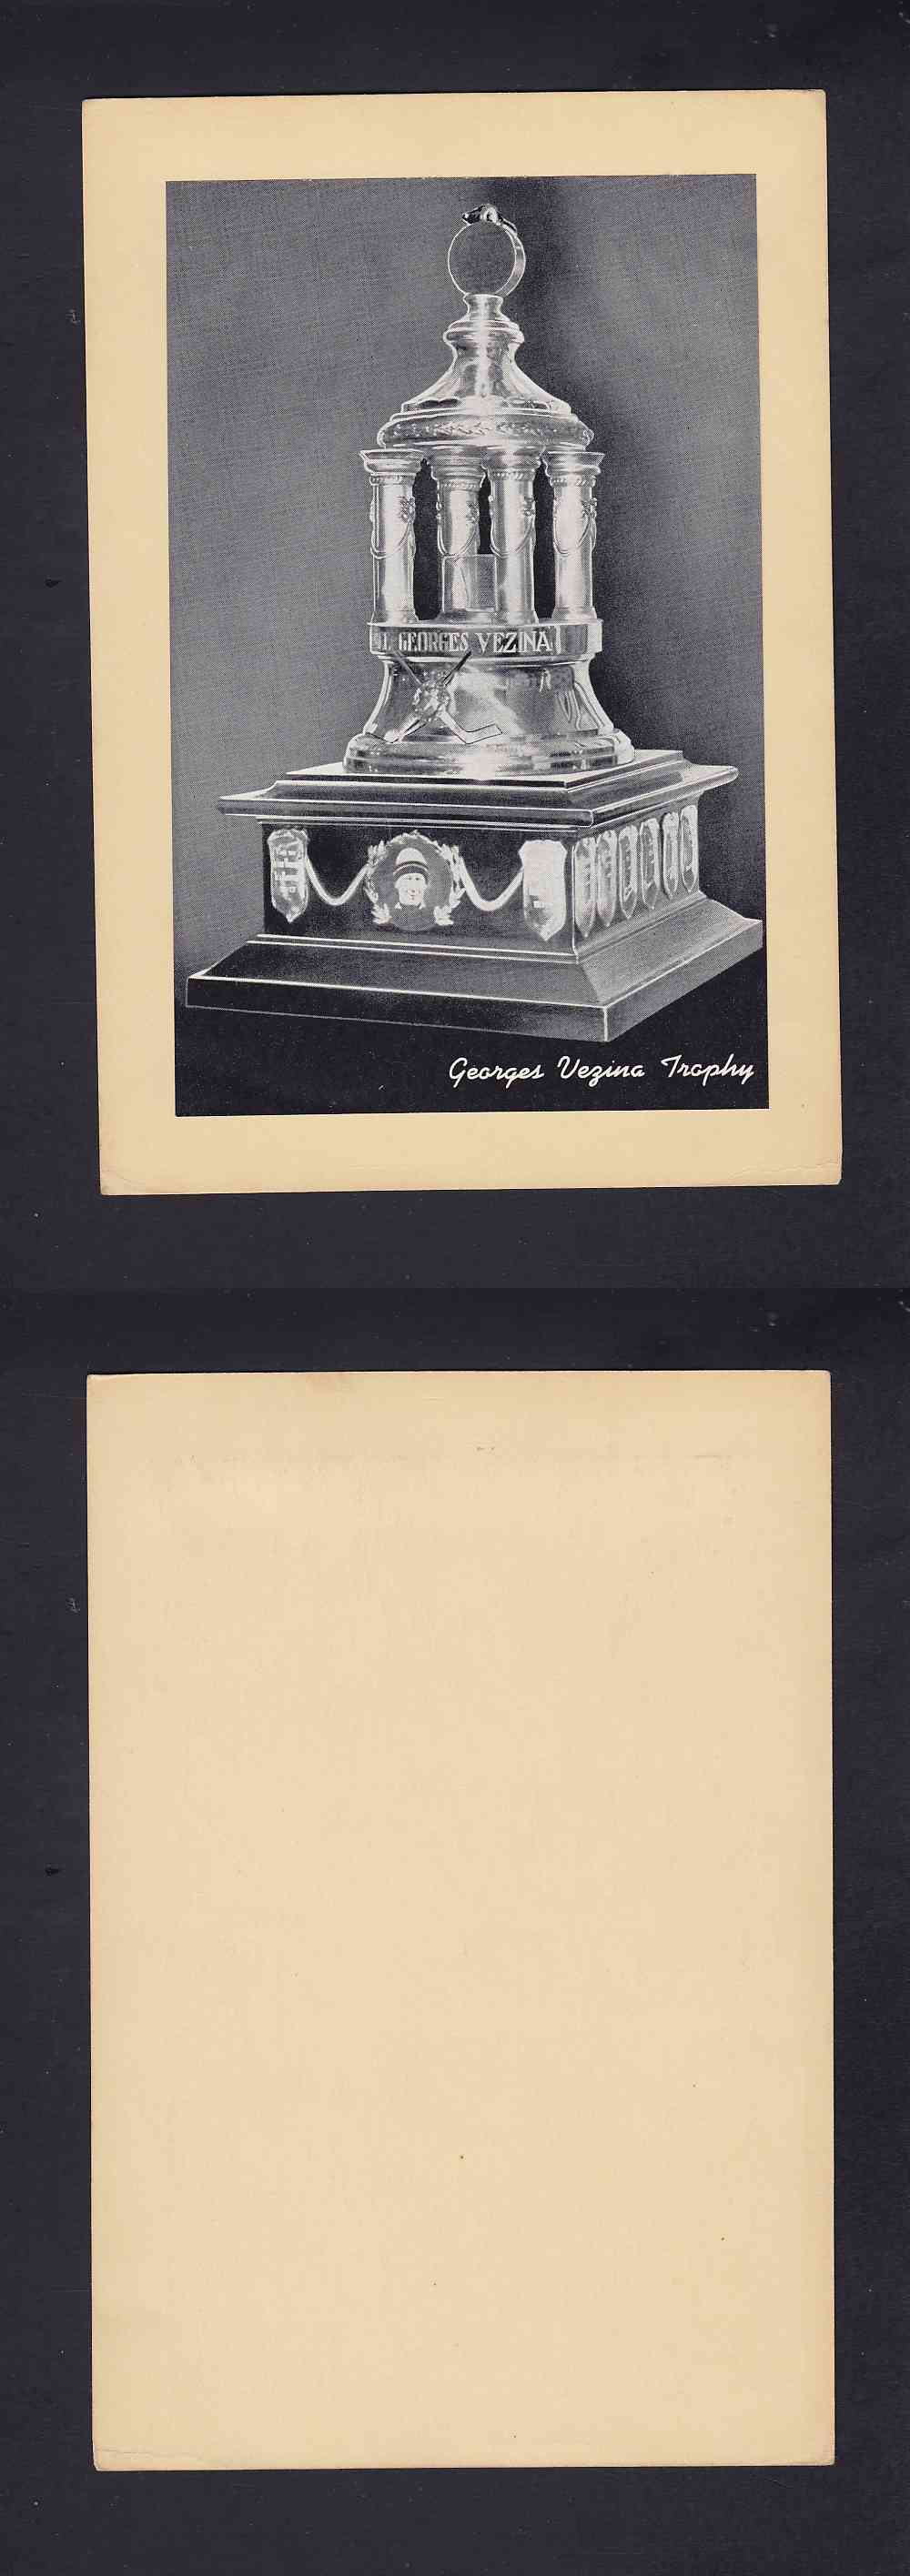 1934-43 BEEHIVE PHOTO GR.1 GEORGE VEZINA TROPHY photo